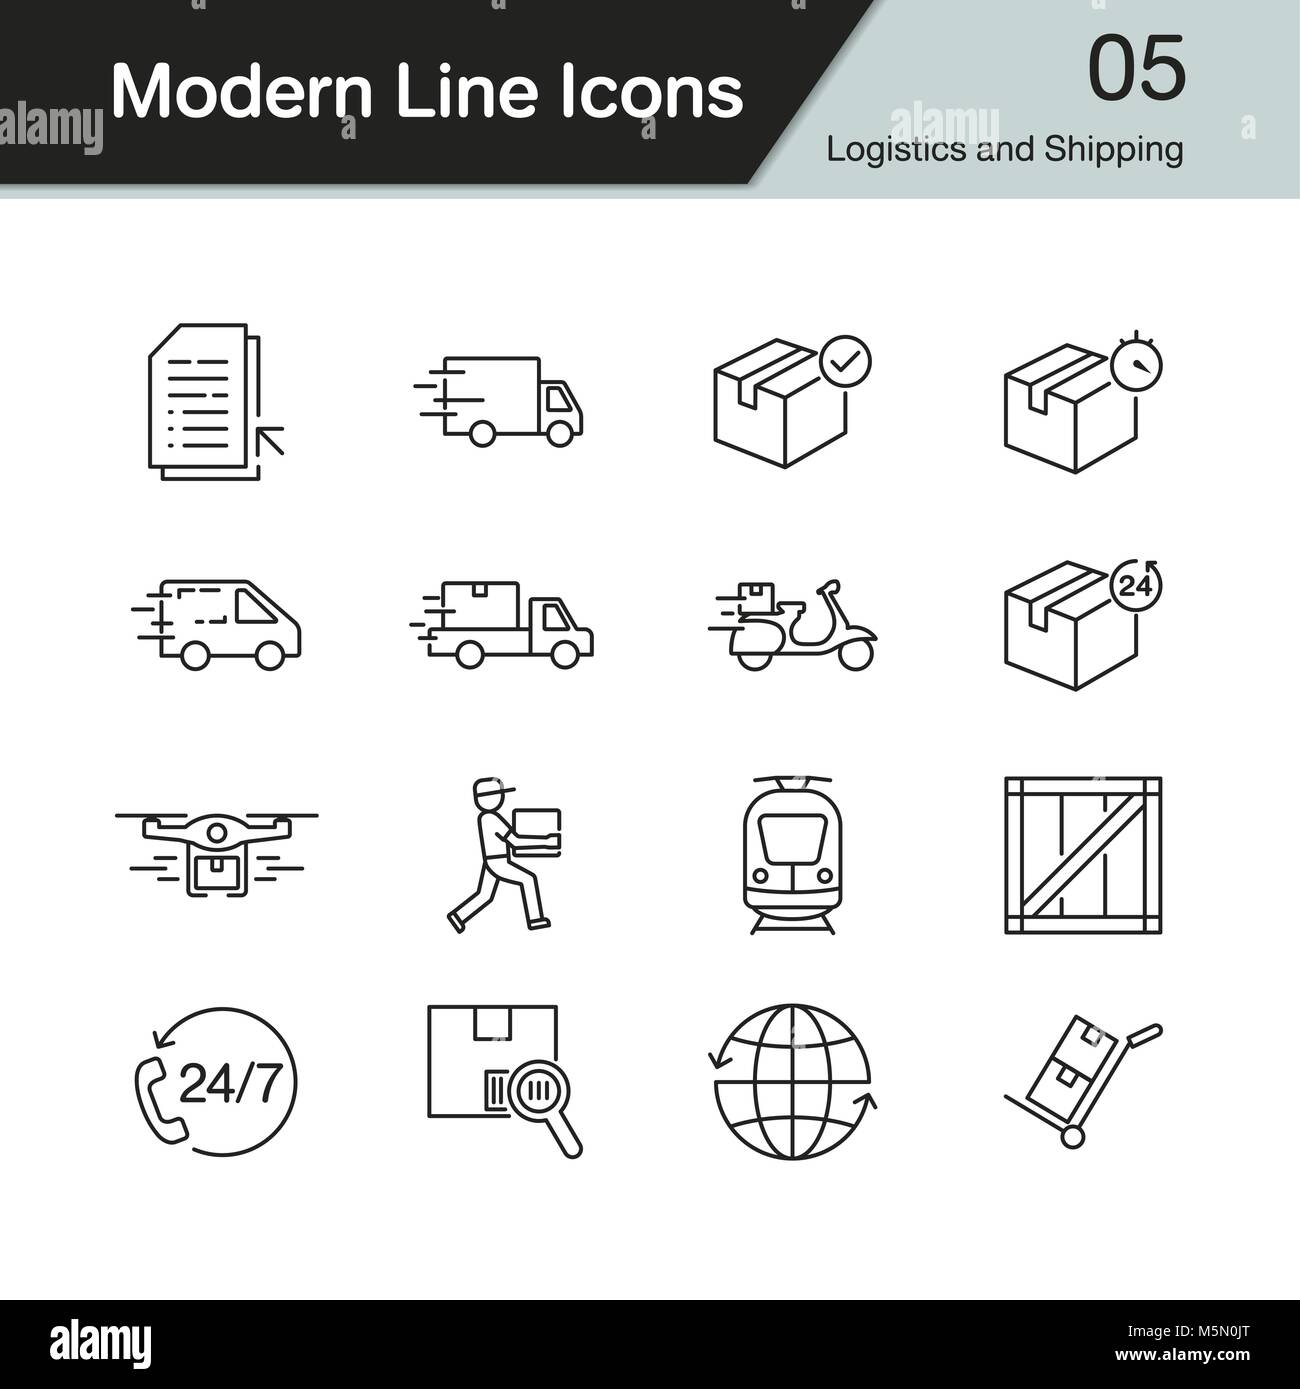 Logistics and Shipping icons. Modern line design set 5. For presentation, graphic design, mobile application, web design, infographics. Vector illustr Stock Vector